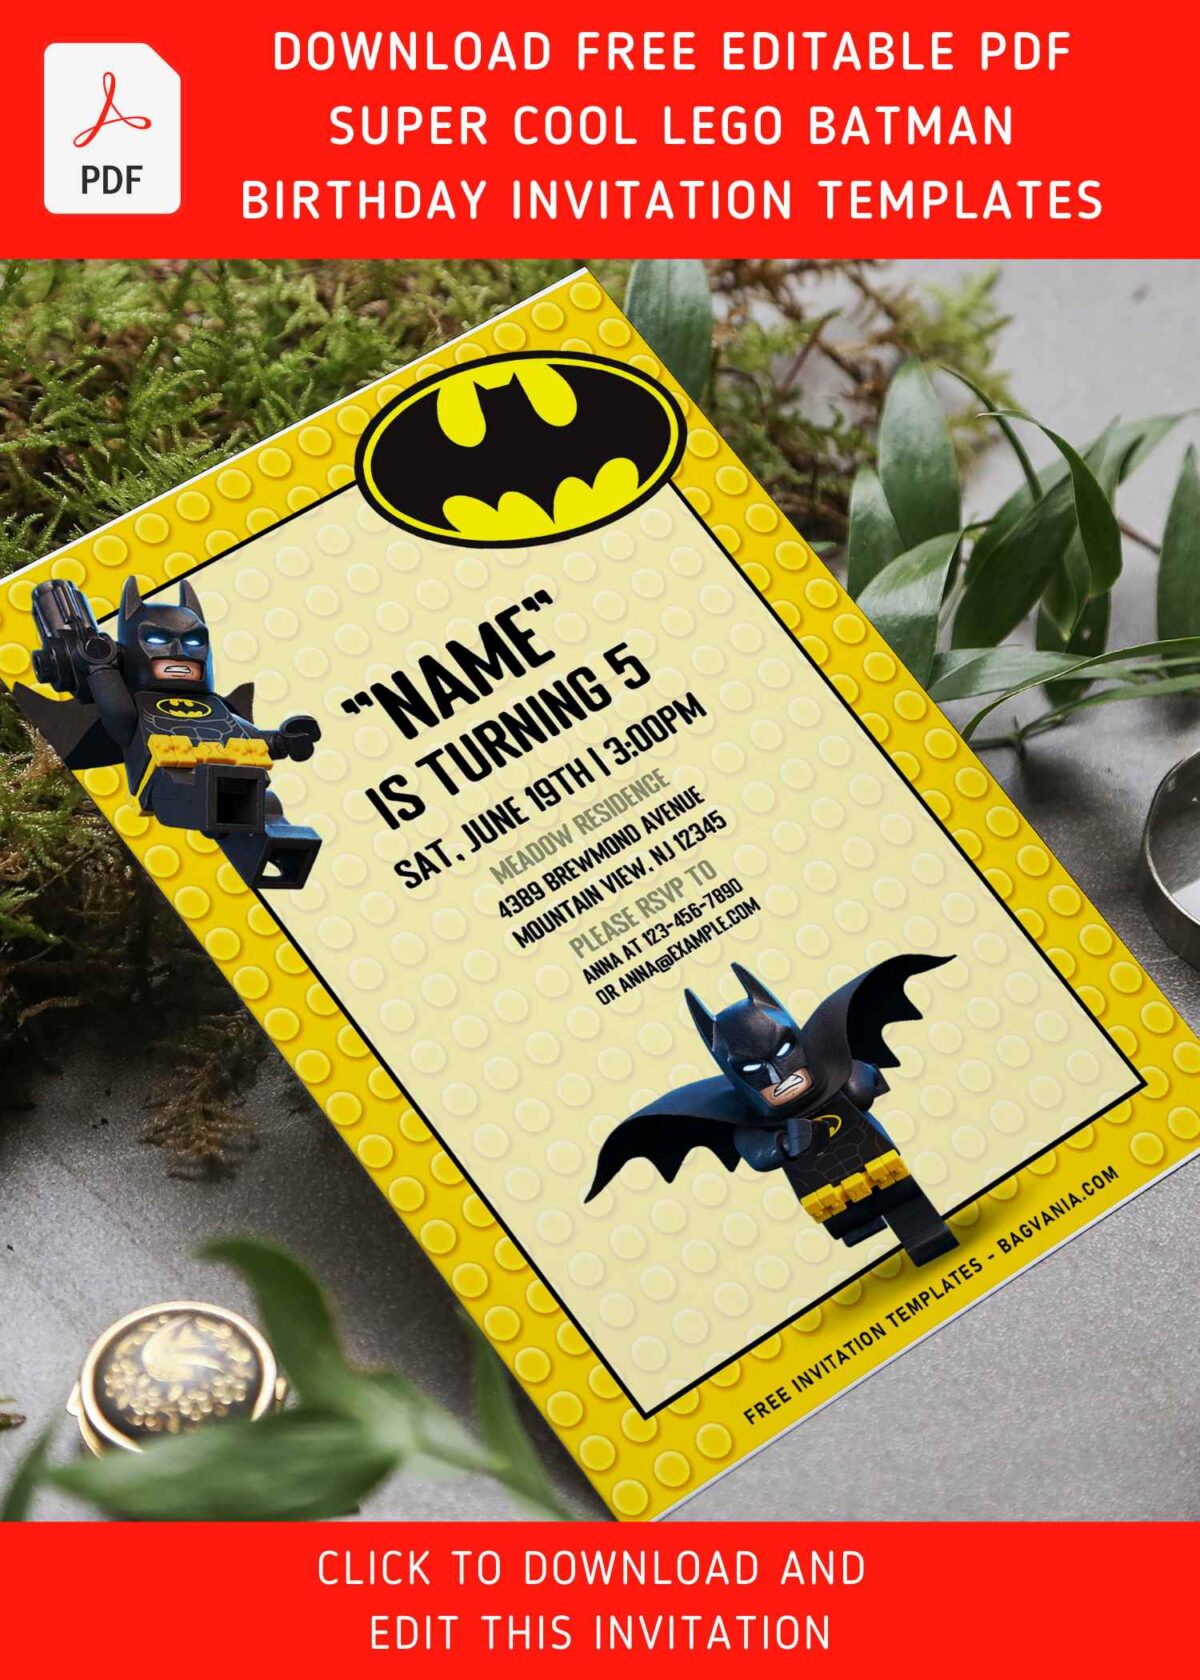 (Free Editable PDF) Super Cool Lego Batman Birthday Invitation Templates with awesome Lego batman graphics